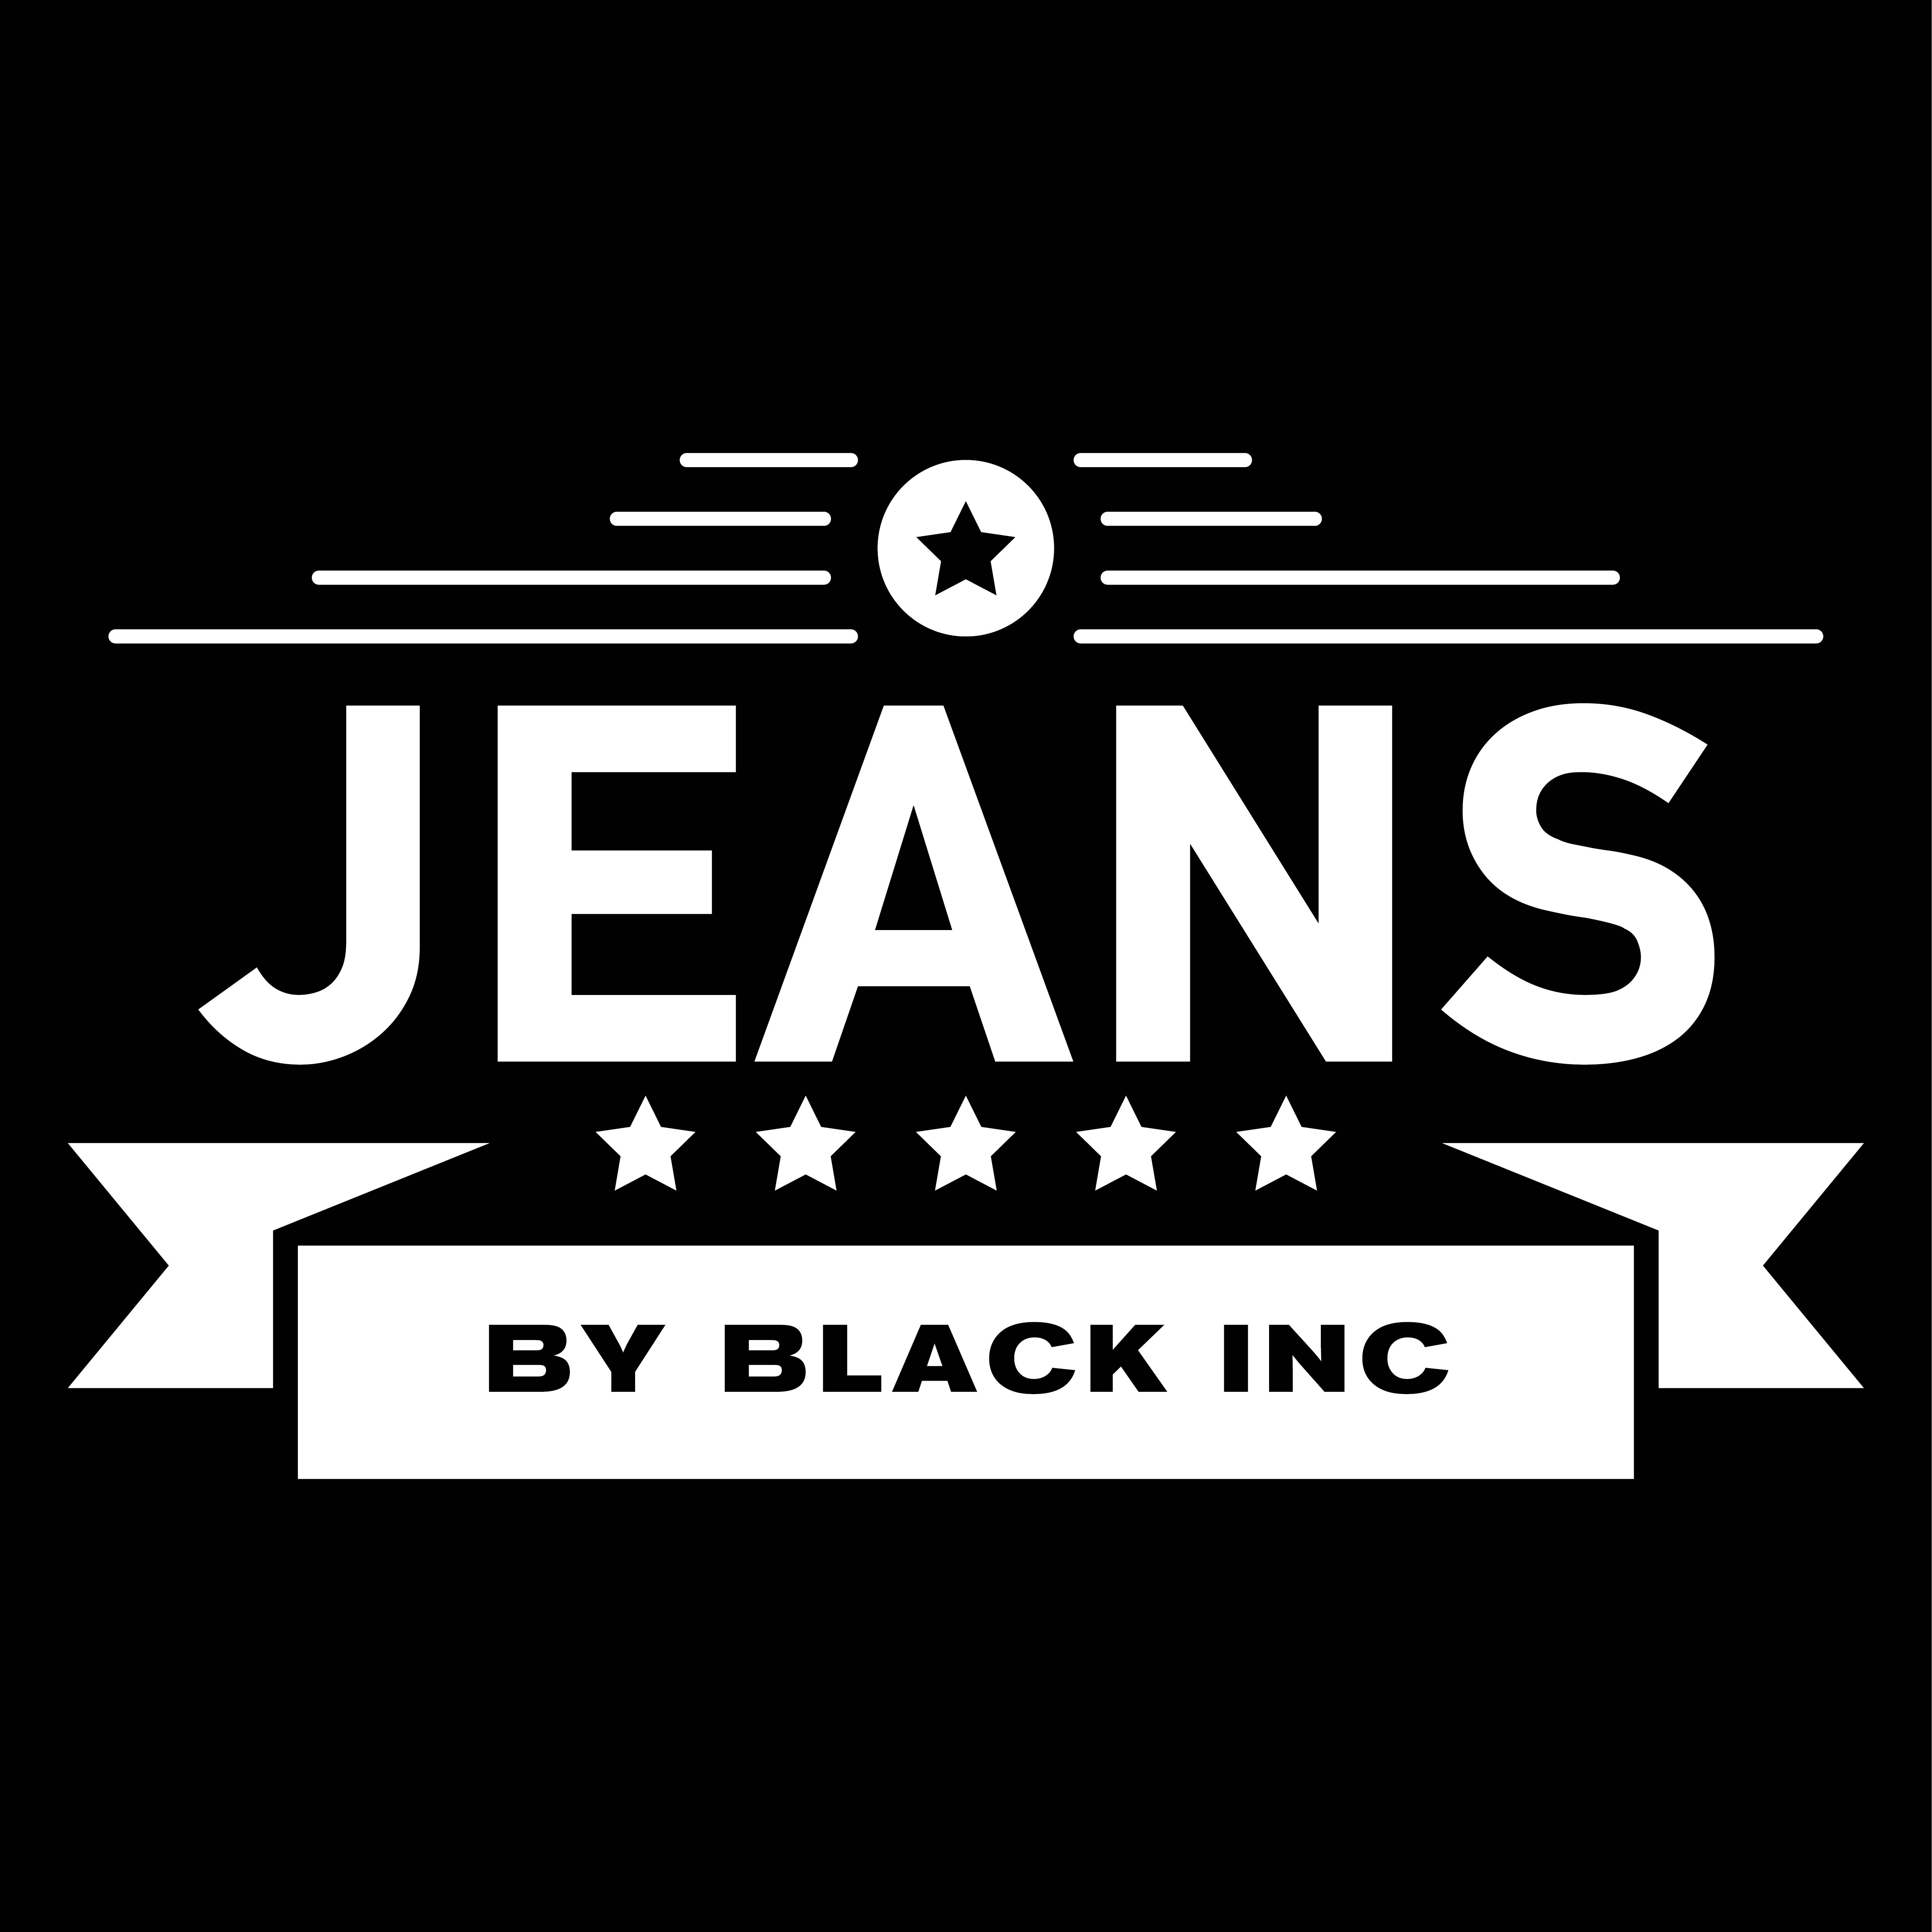 JEANS BY BLACK INC logo-02.jpg